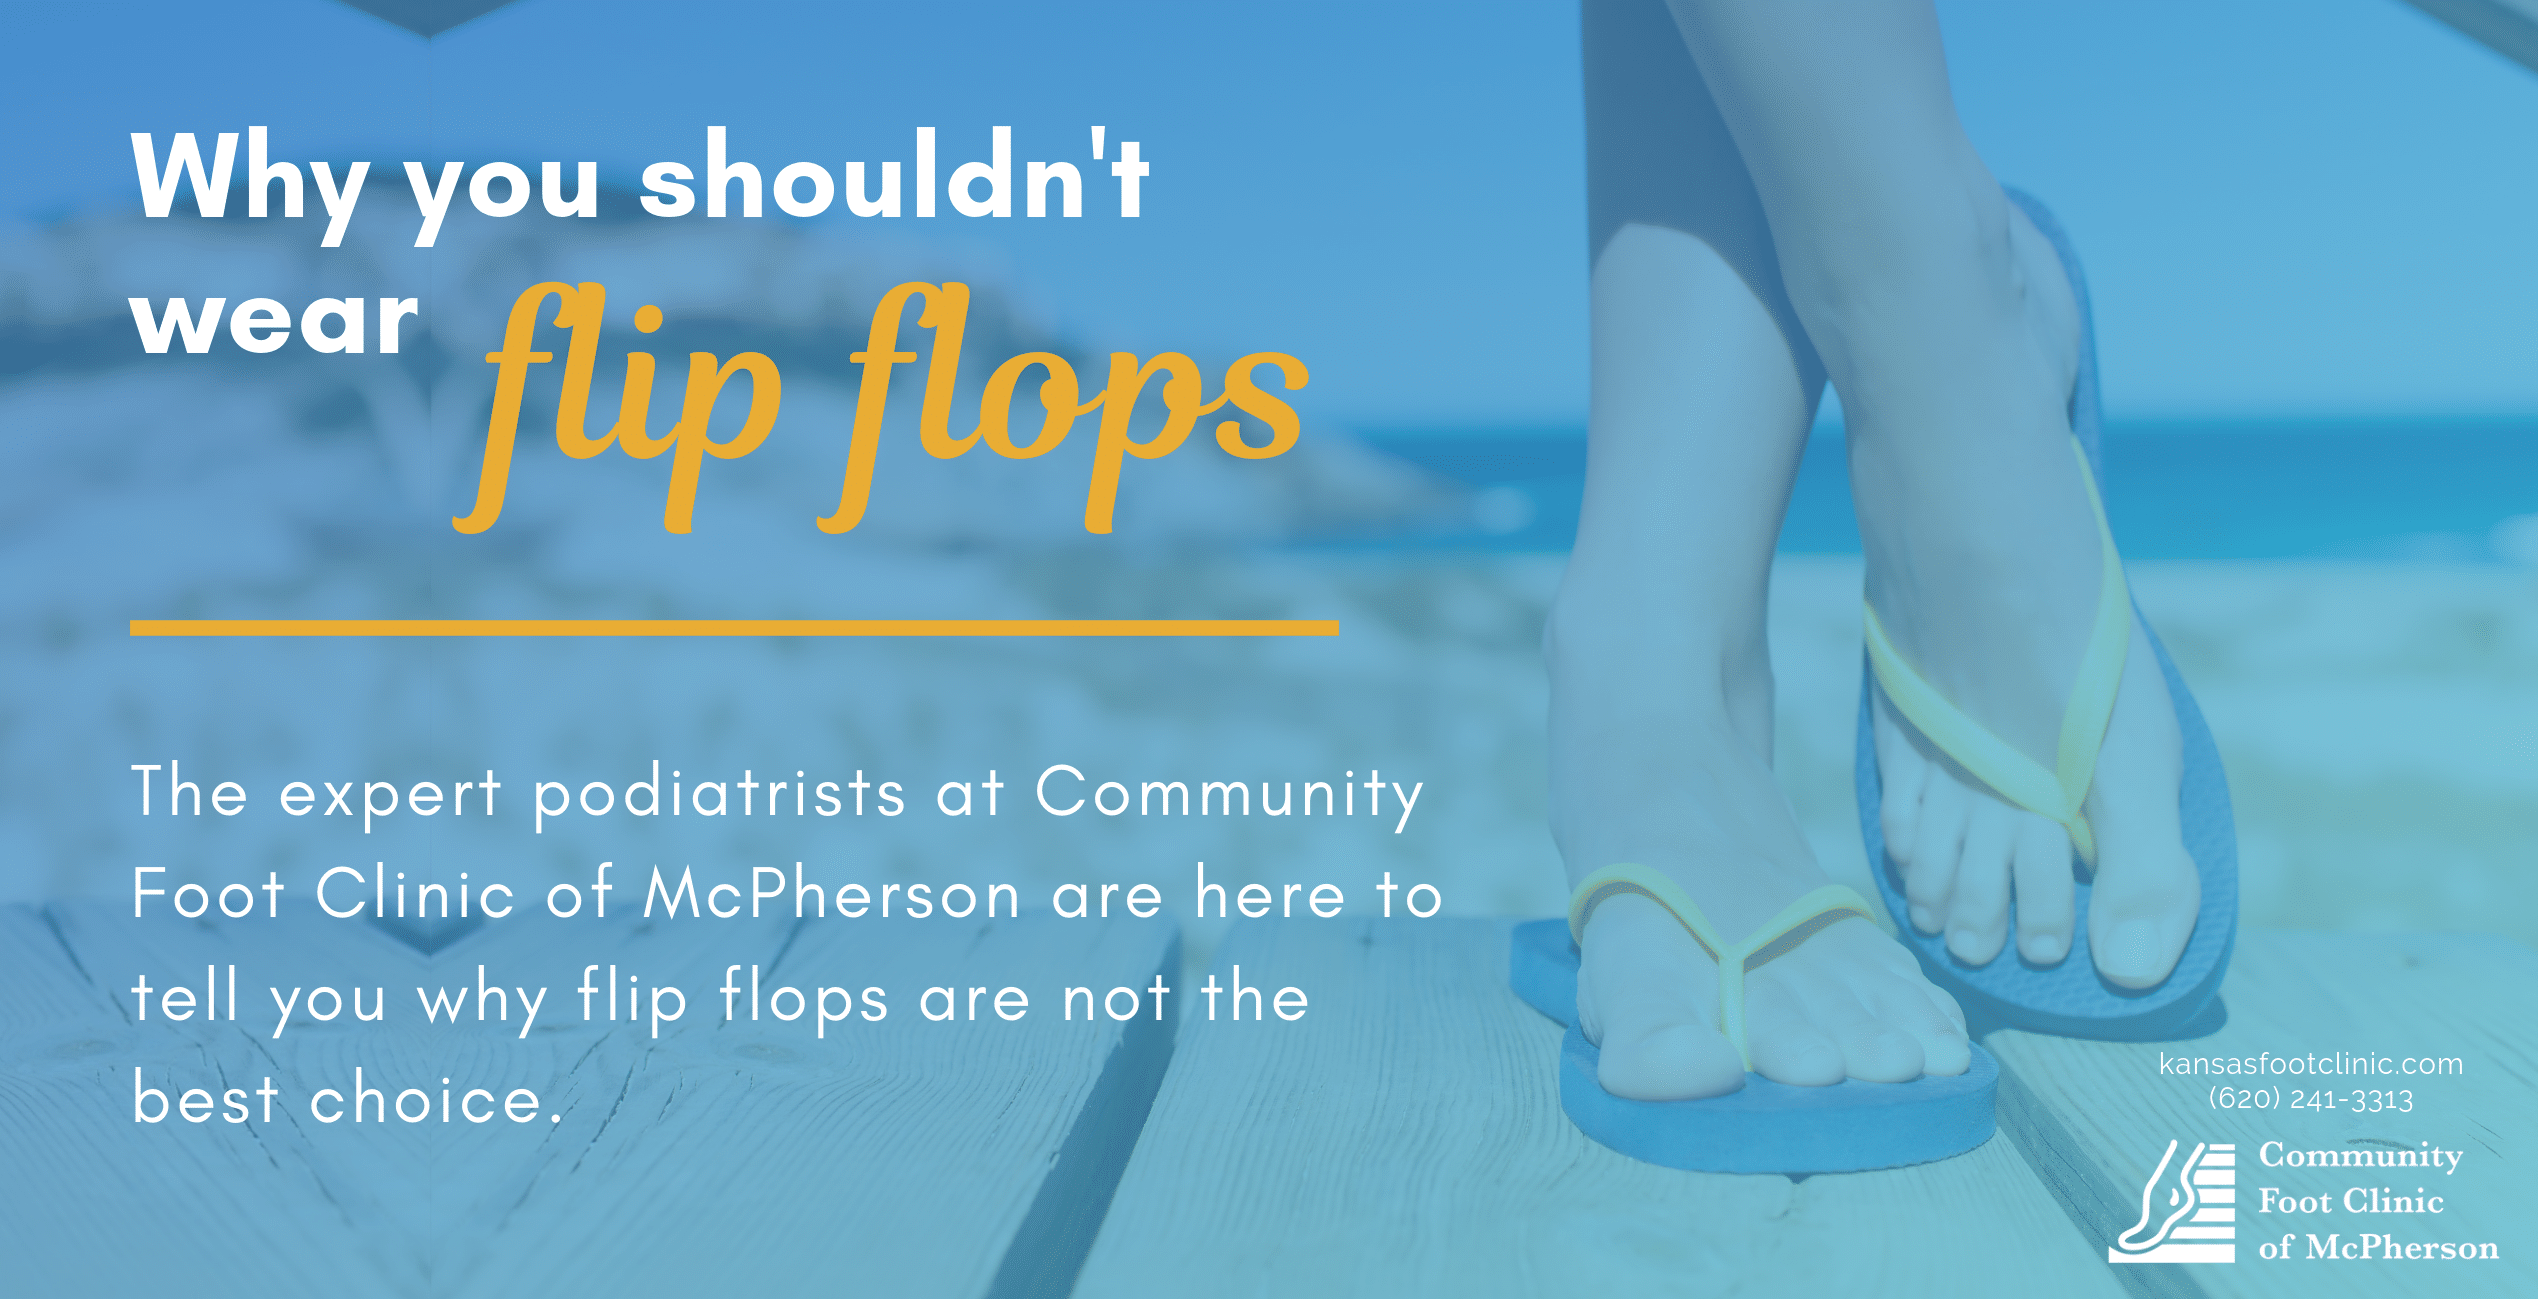 You shouldn't wear flip flops